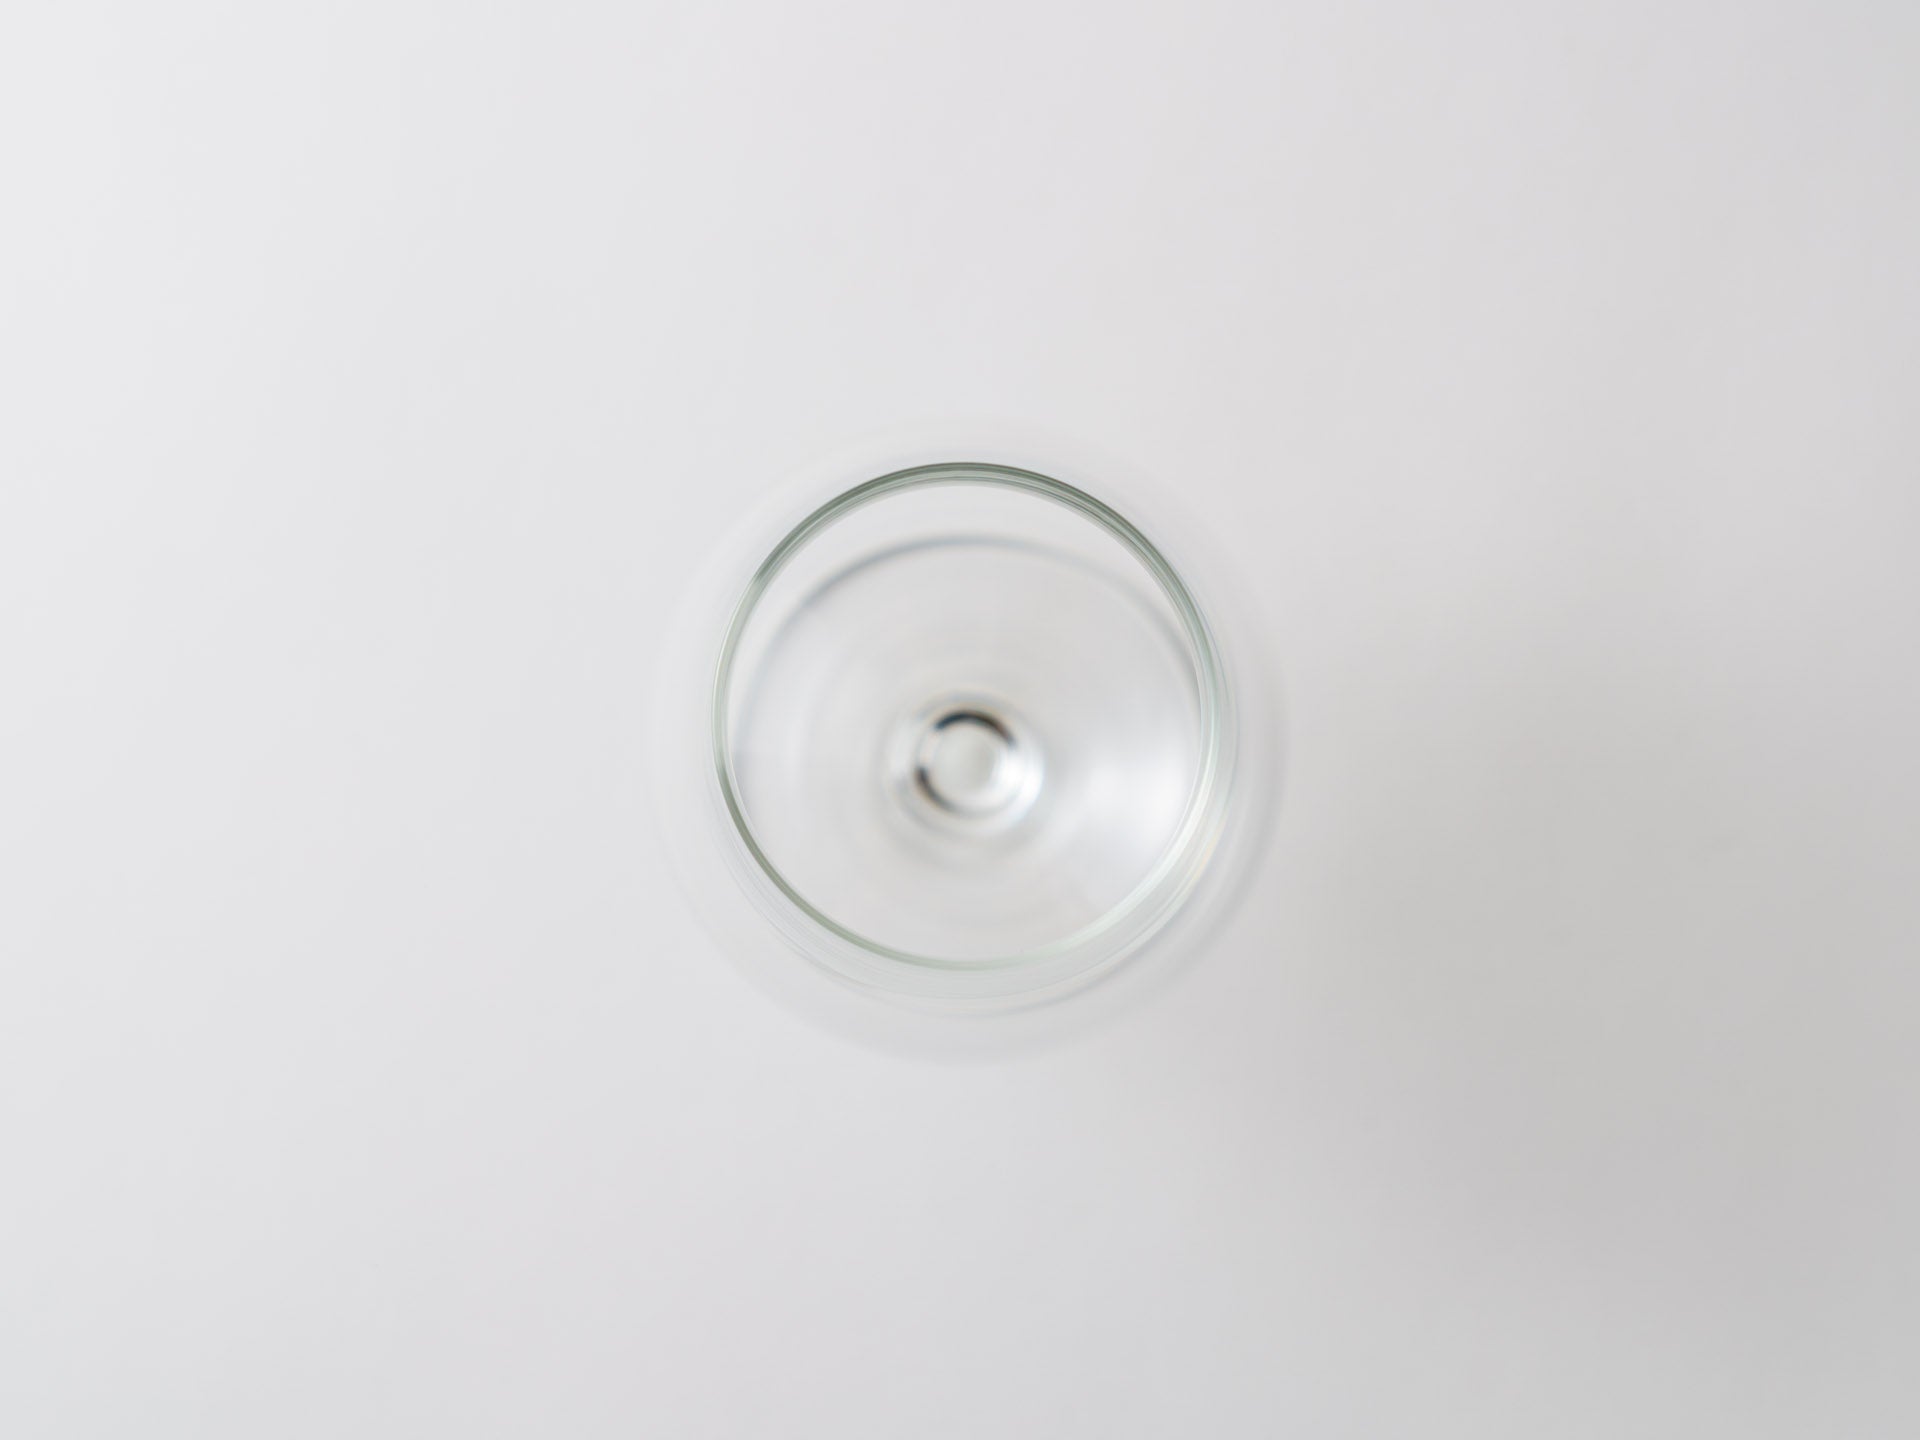 Beer stem glass clear [Yudai Koga]